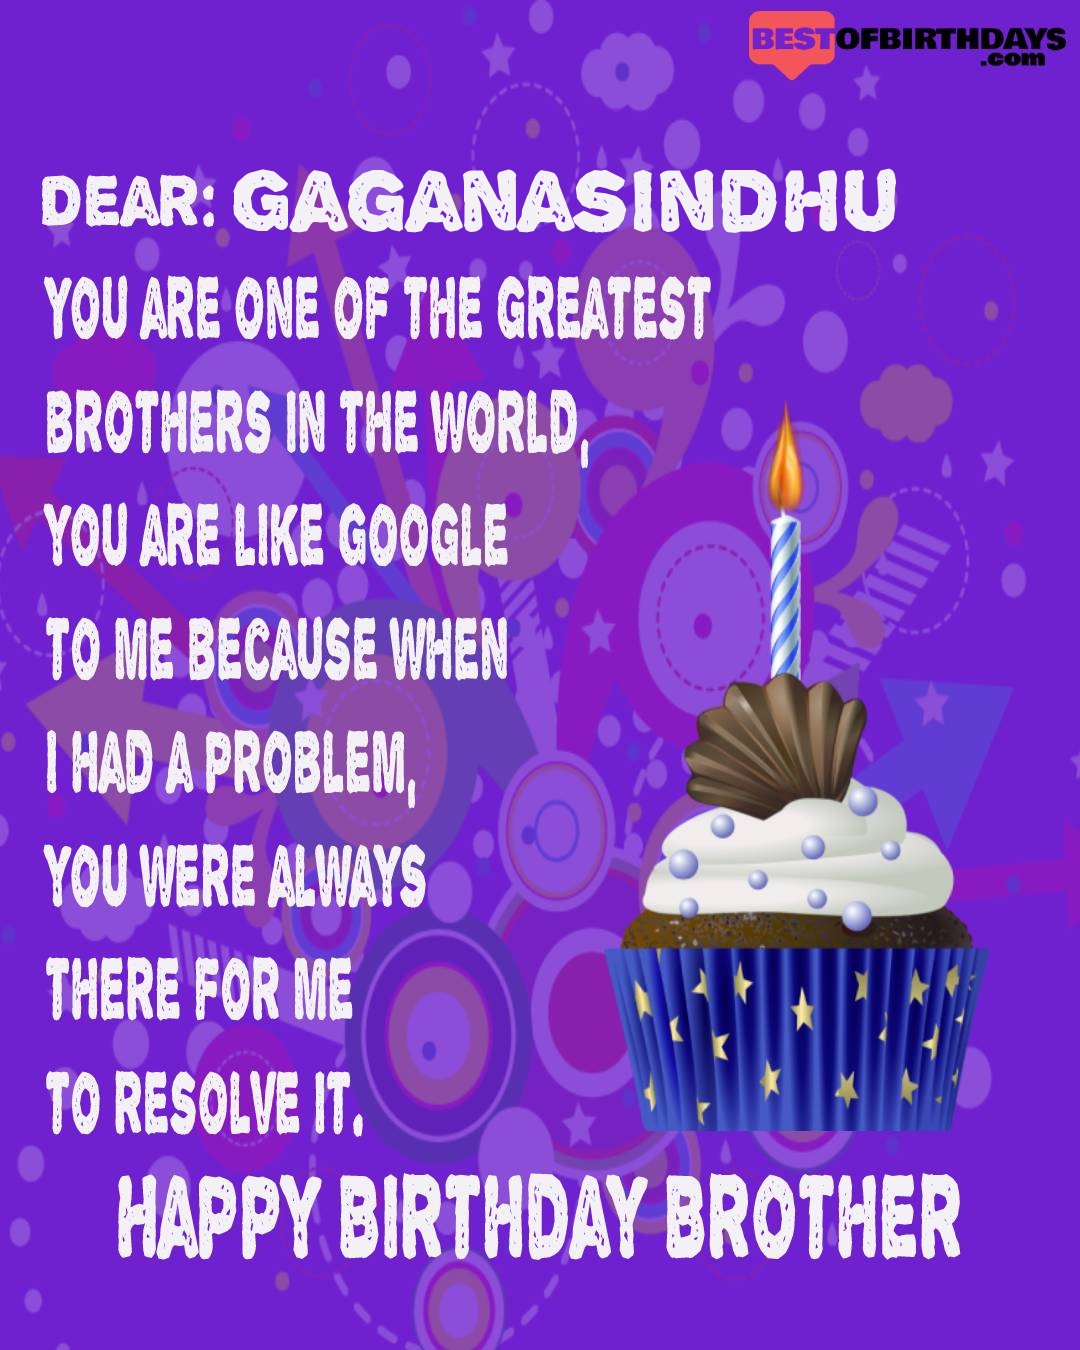 Happy birthday gaganasindhu bhai brother bro